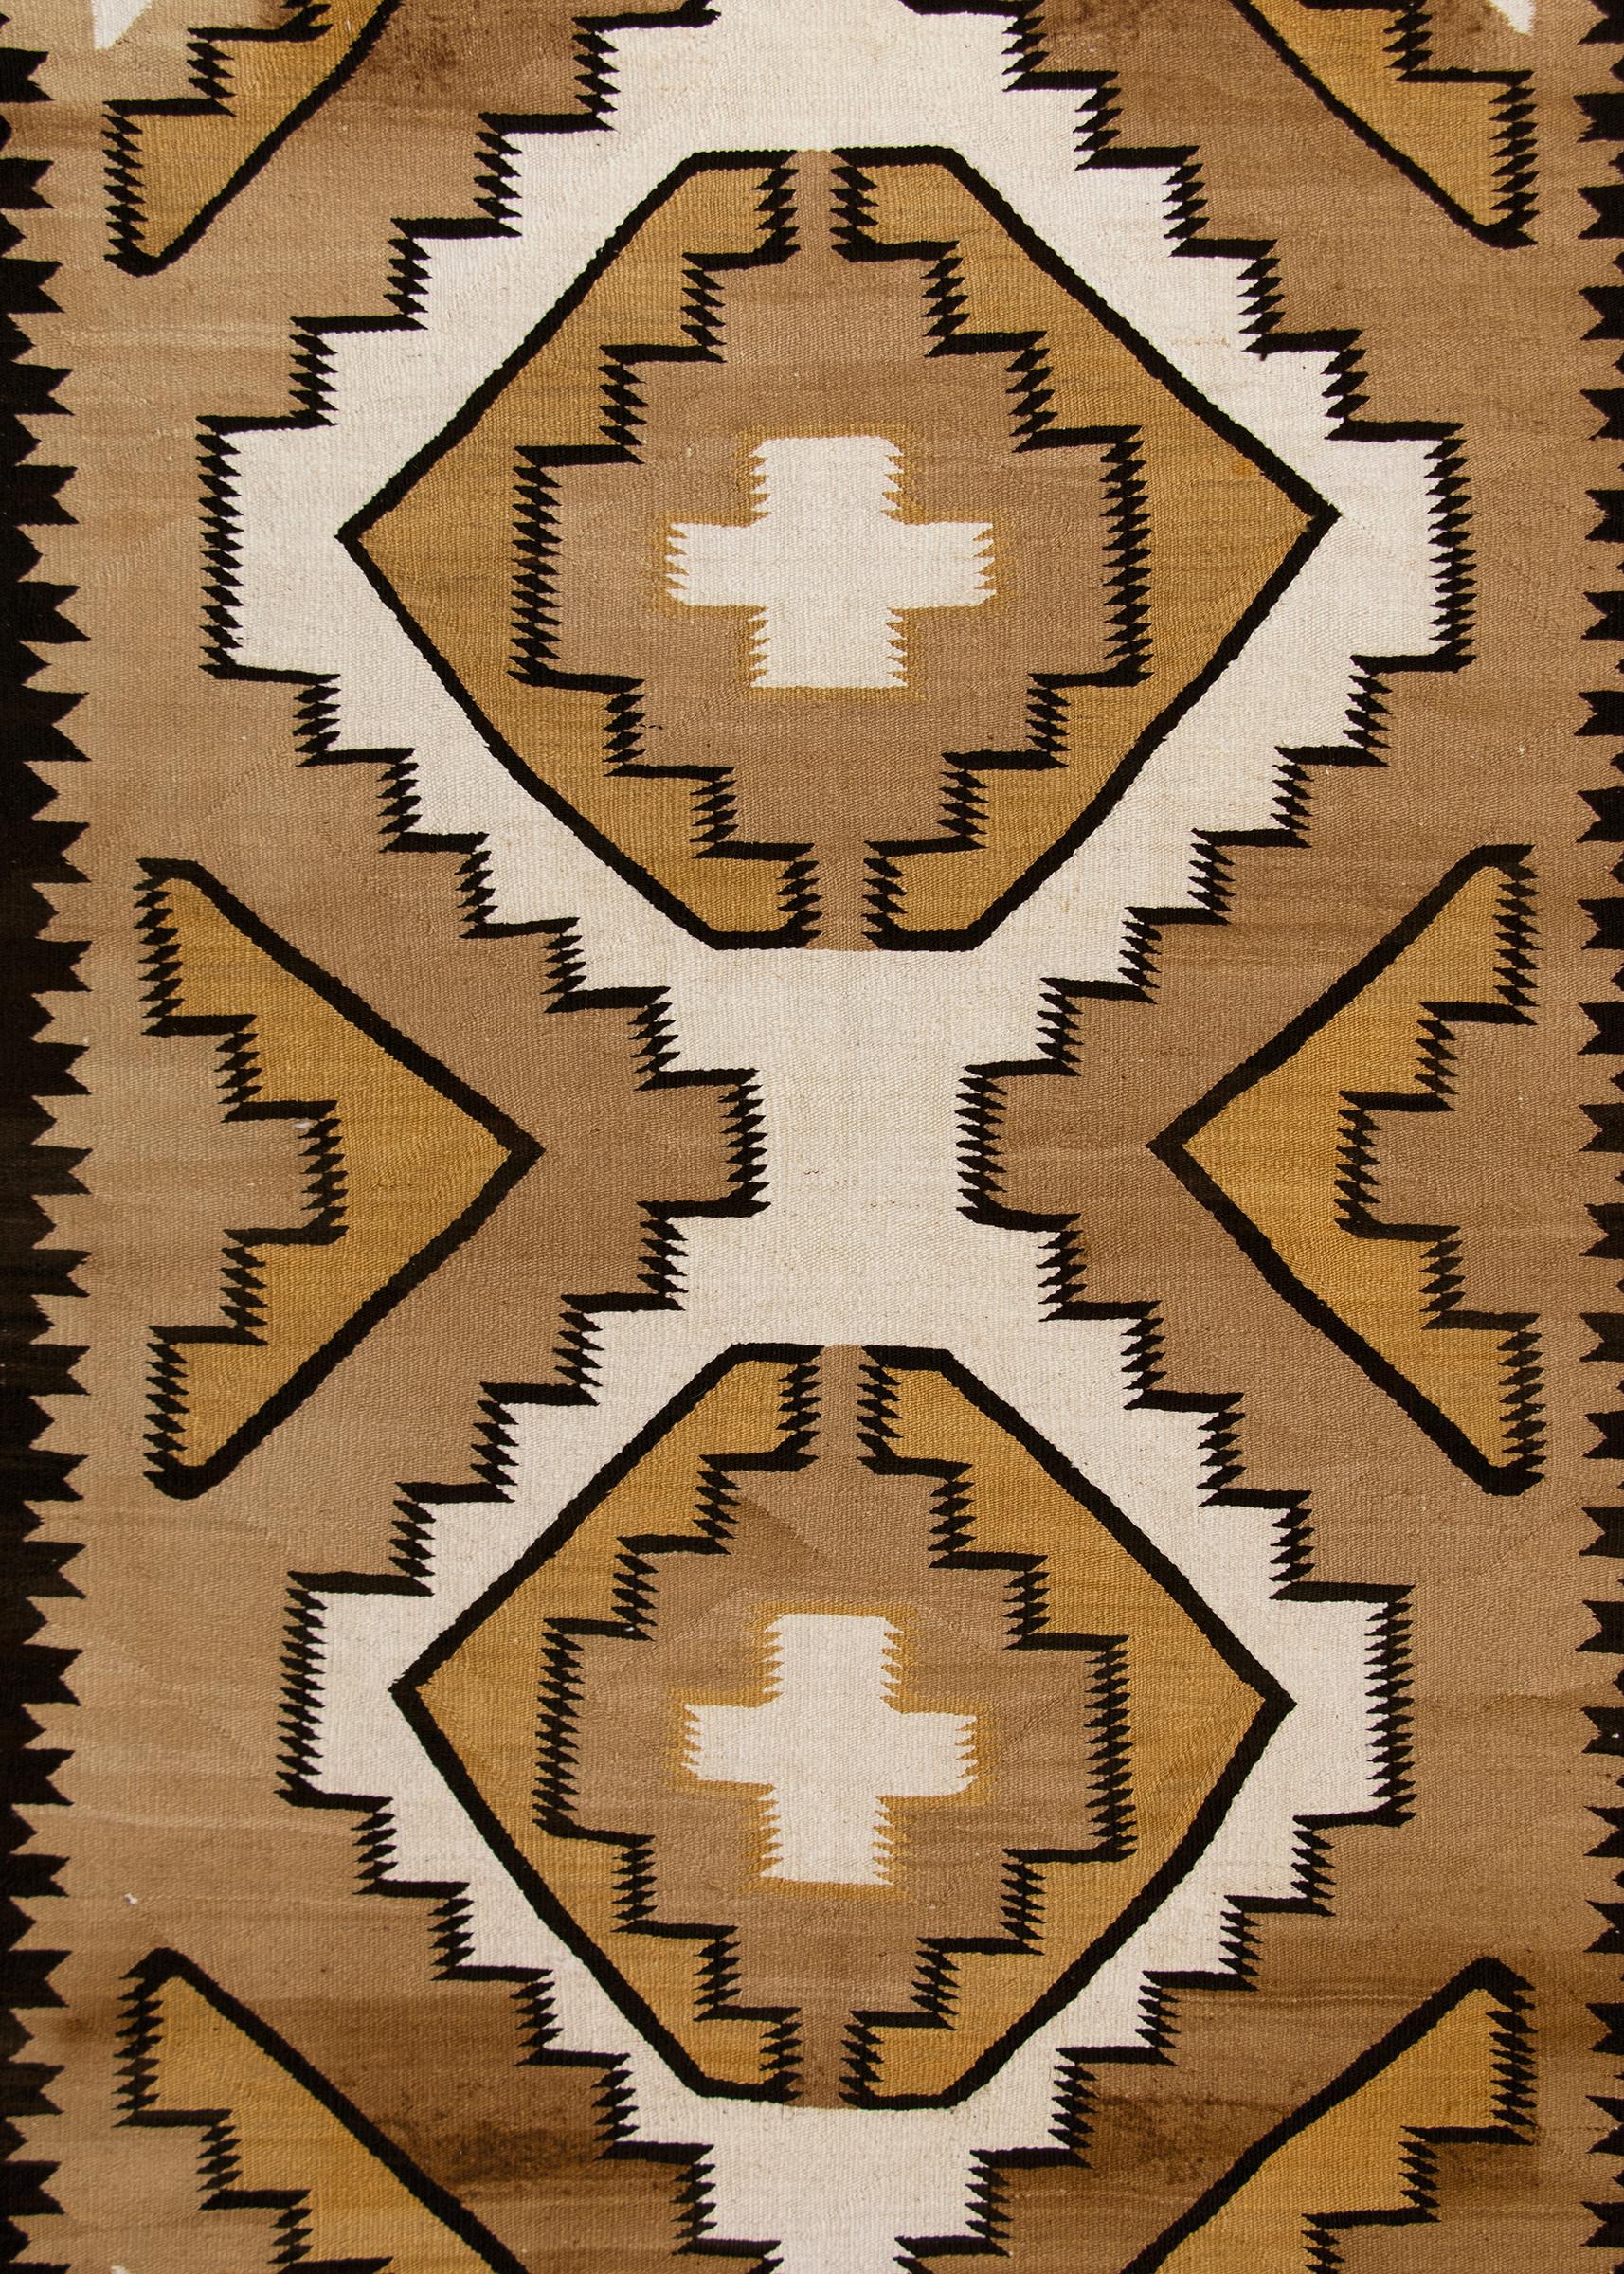 Native American Vintage Navajo Rug, Crystal Trading Post, circa 1930s-1950s, Brown, Camel, Ivory